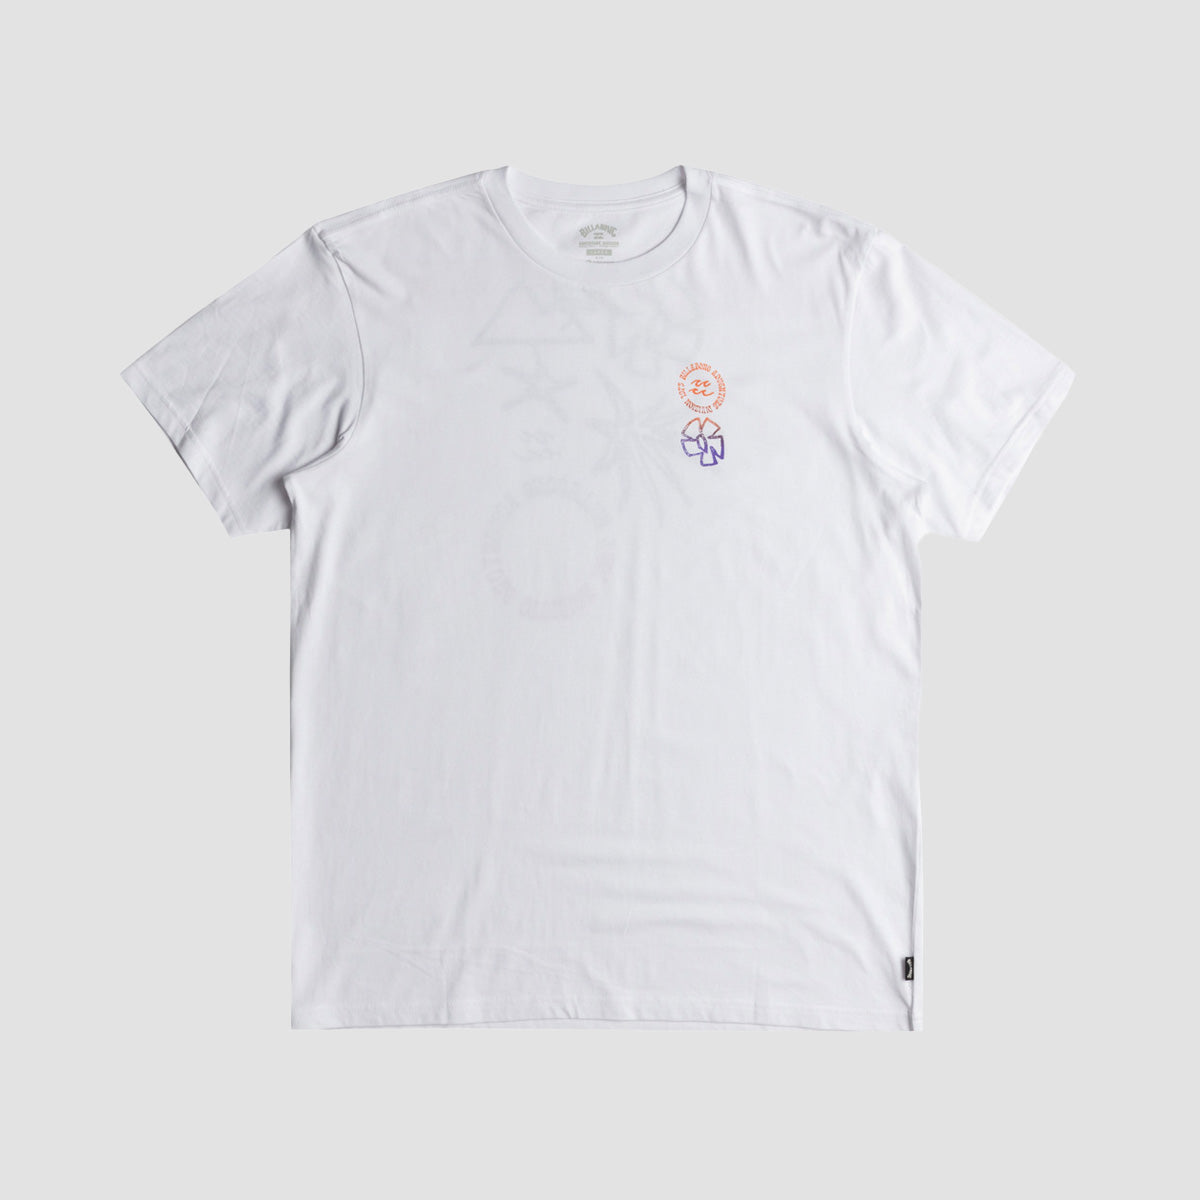 Billabong Symbols T-Shirt White